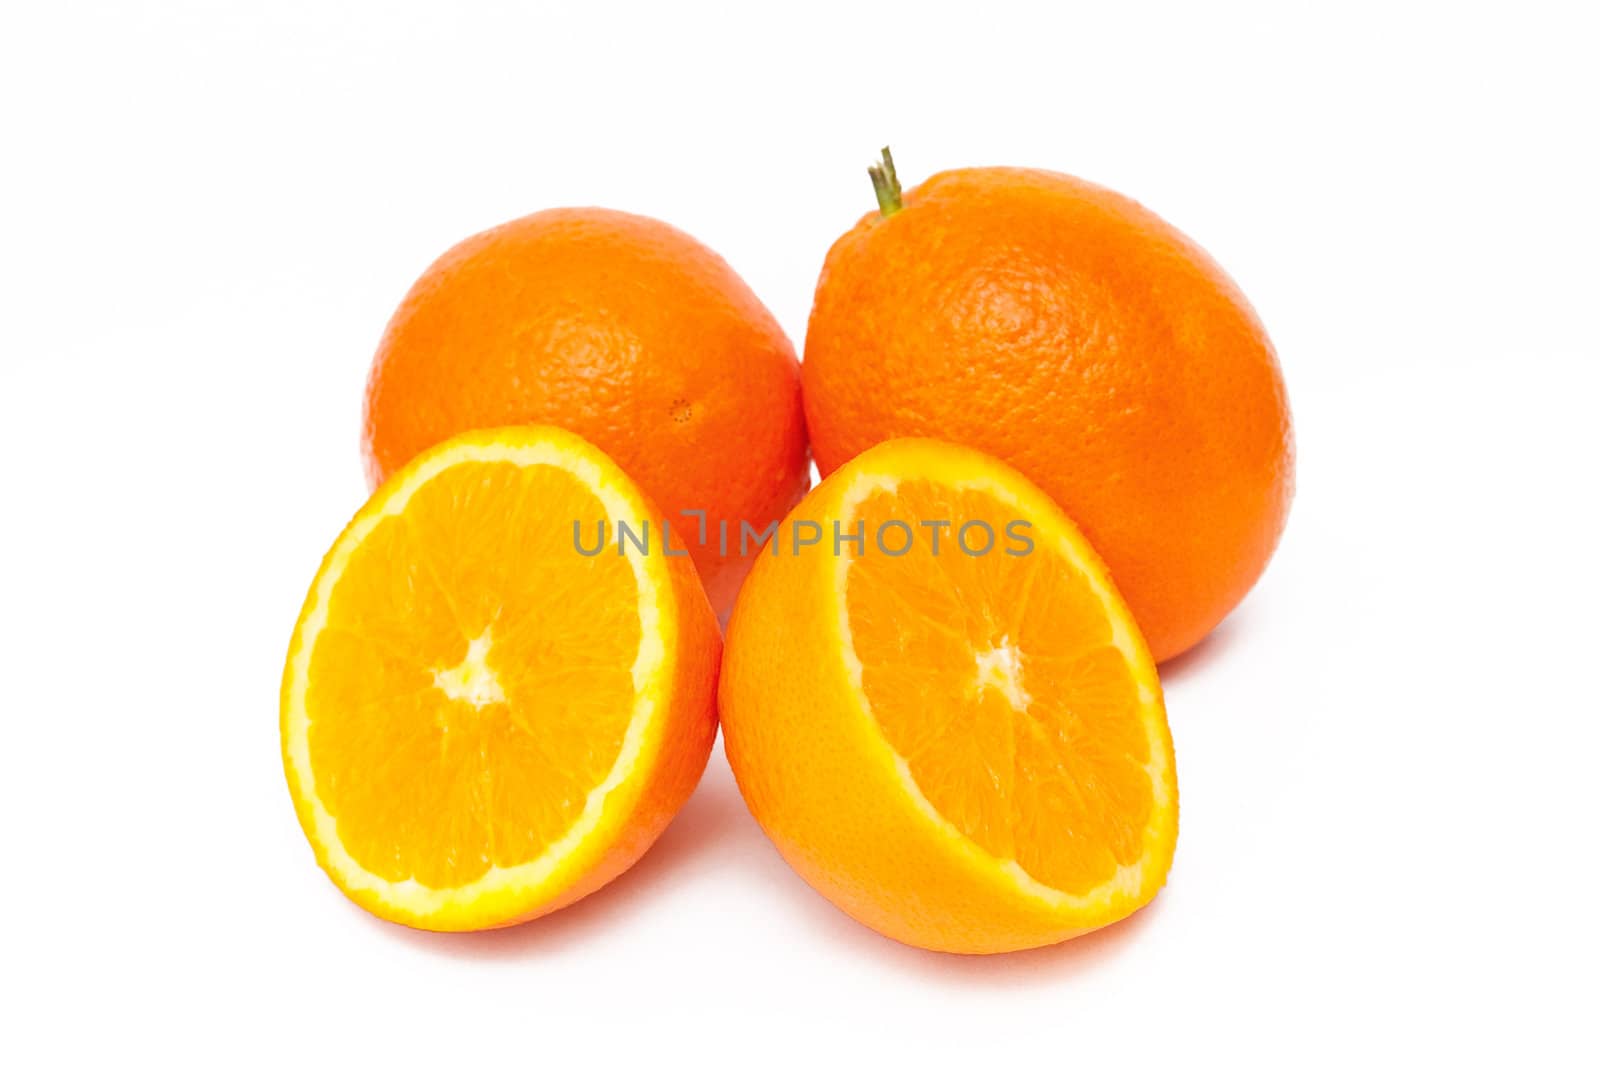 Oranges by Yaurinko